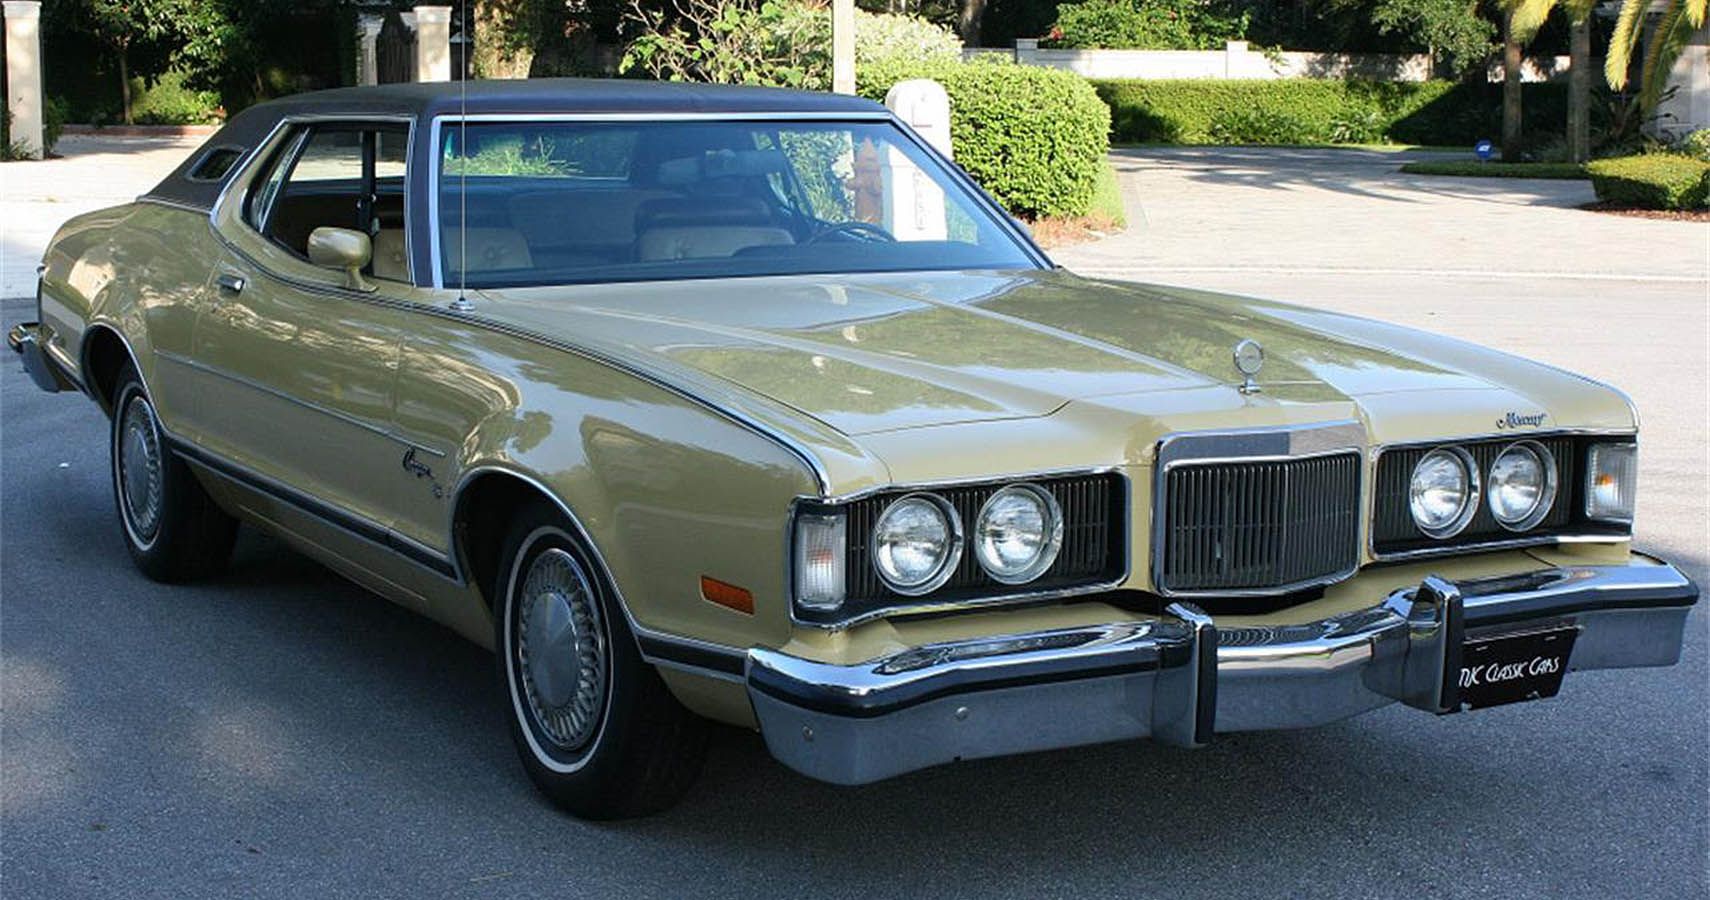 1974-1976 Mercury Cougar: Bigger, Broader But Not Better